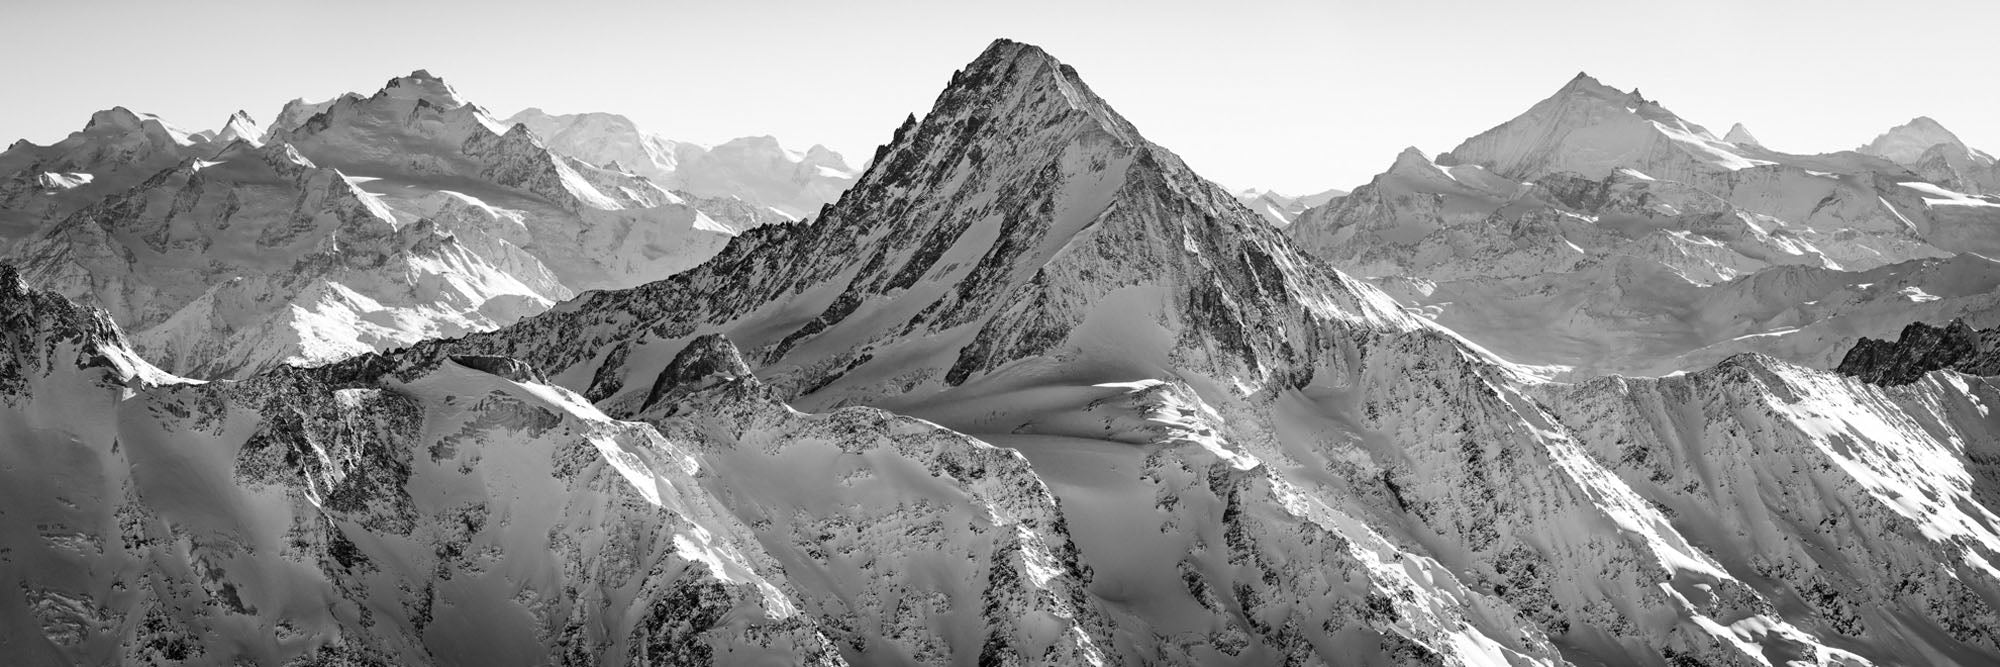 Valais Alps, Panorama, Switzerland (DSC9592) - Petra Gut Contemporary AG Thomas Crauwels